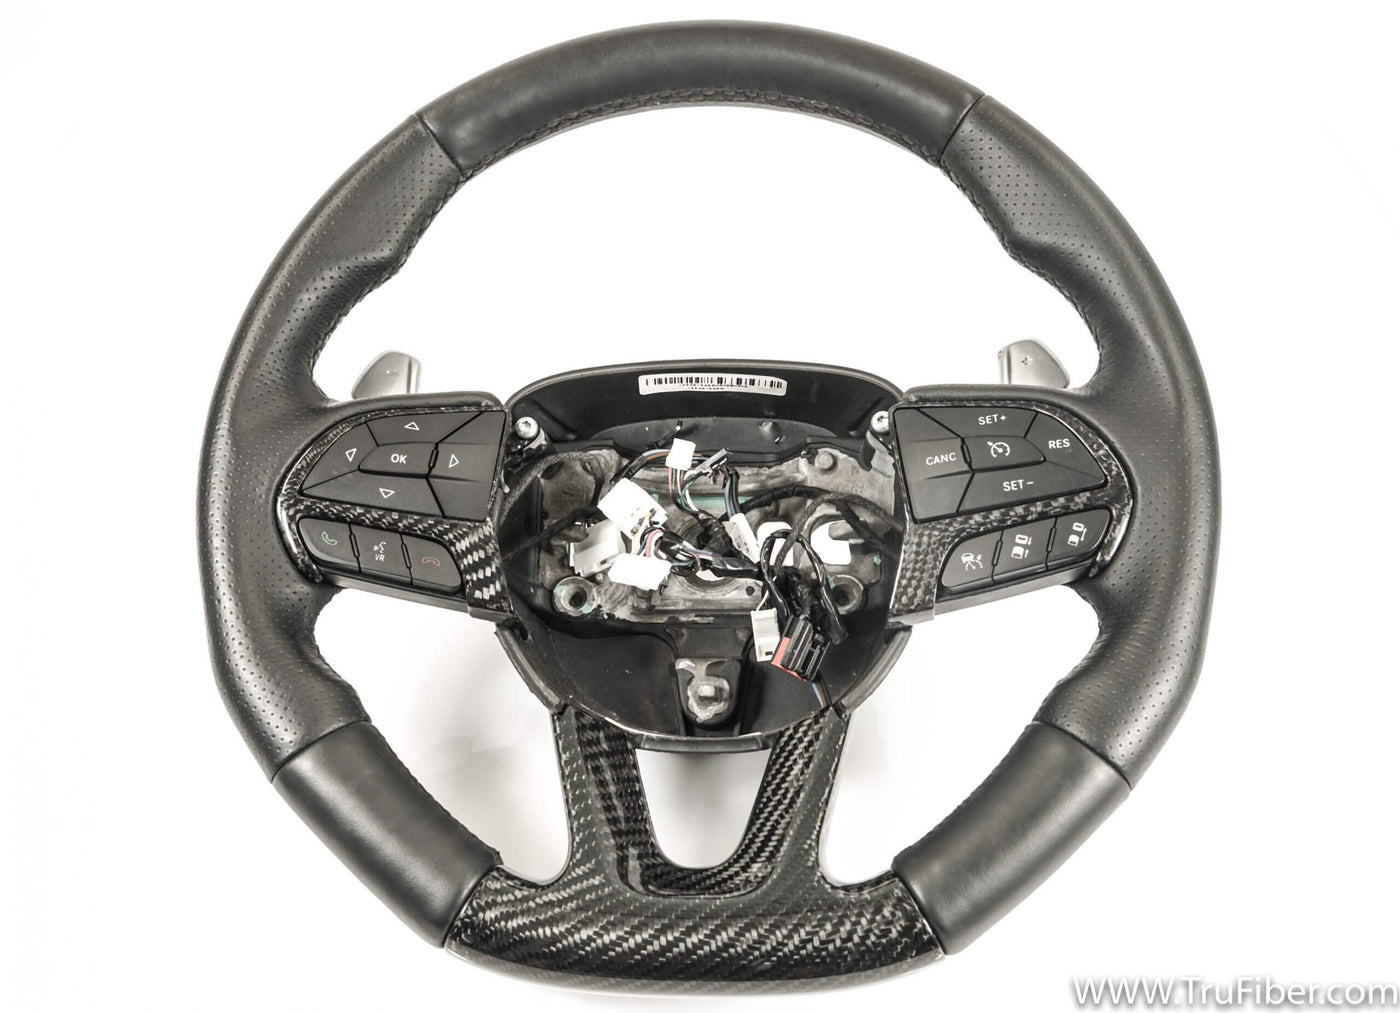 Mopar Carbon Fiber LG492 Steering Wheel Trim Inserts